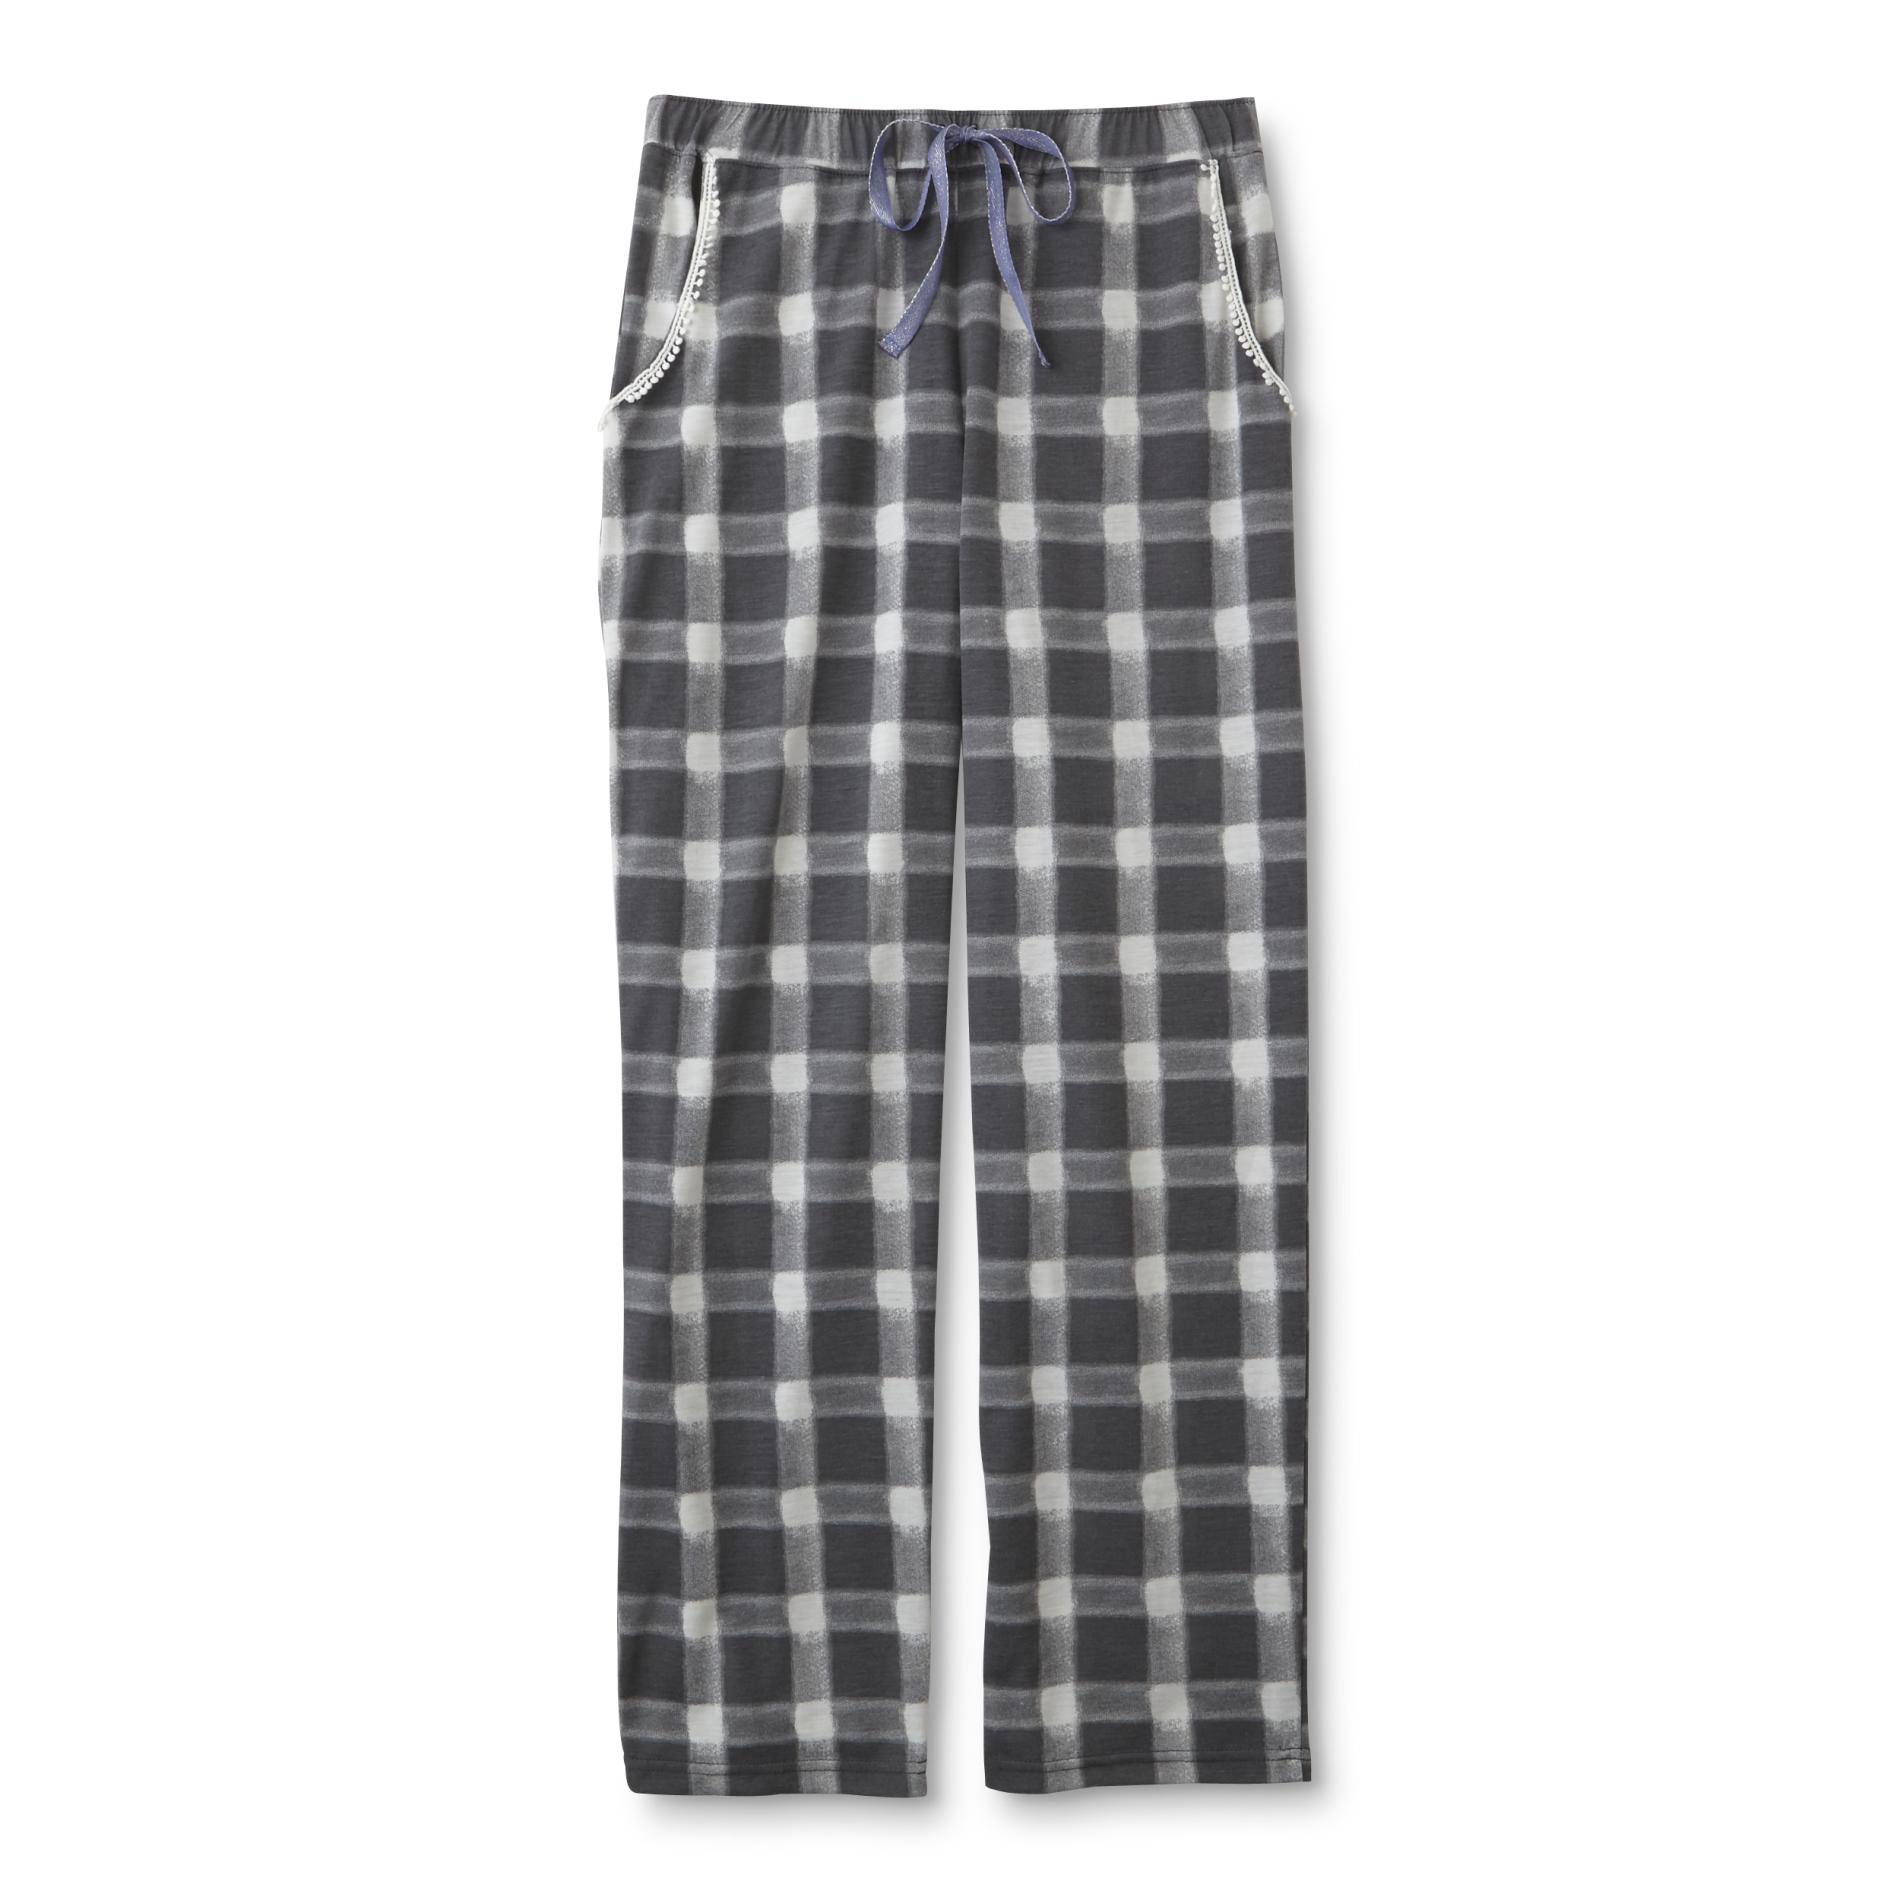 Simply Styled Women's Pajama Pants - Plaid